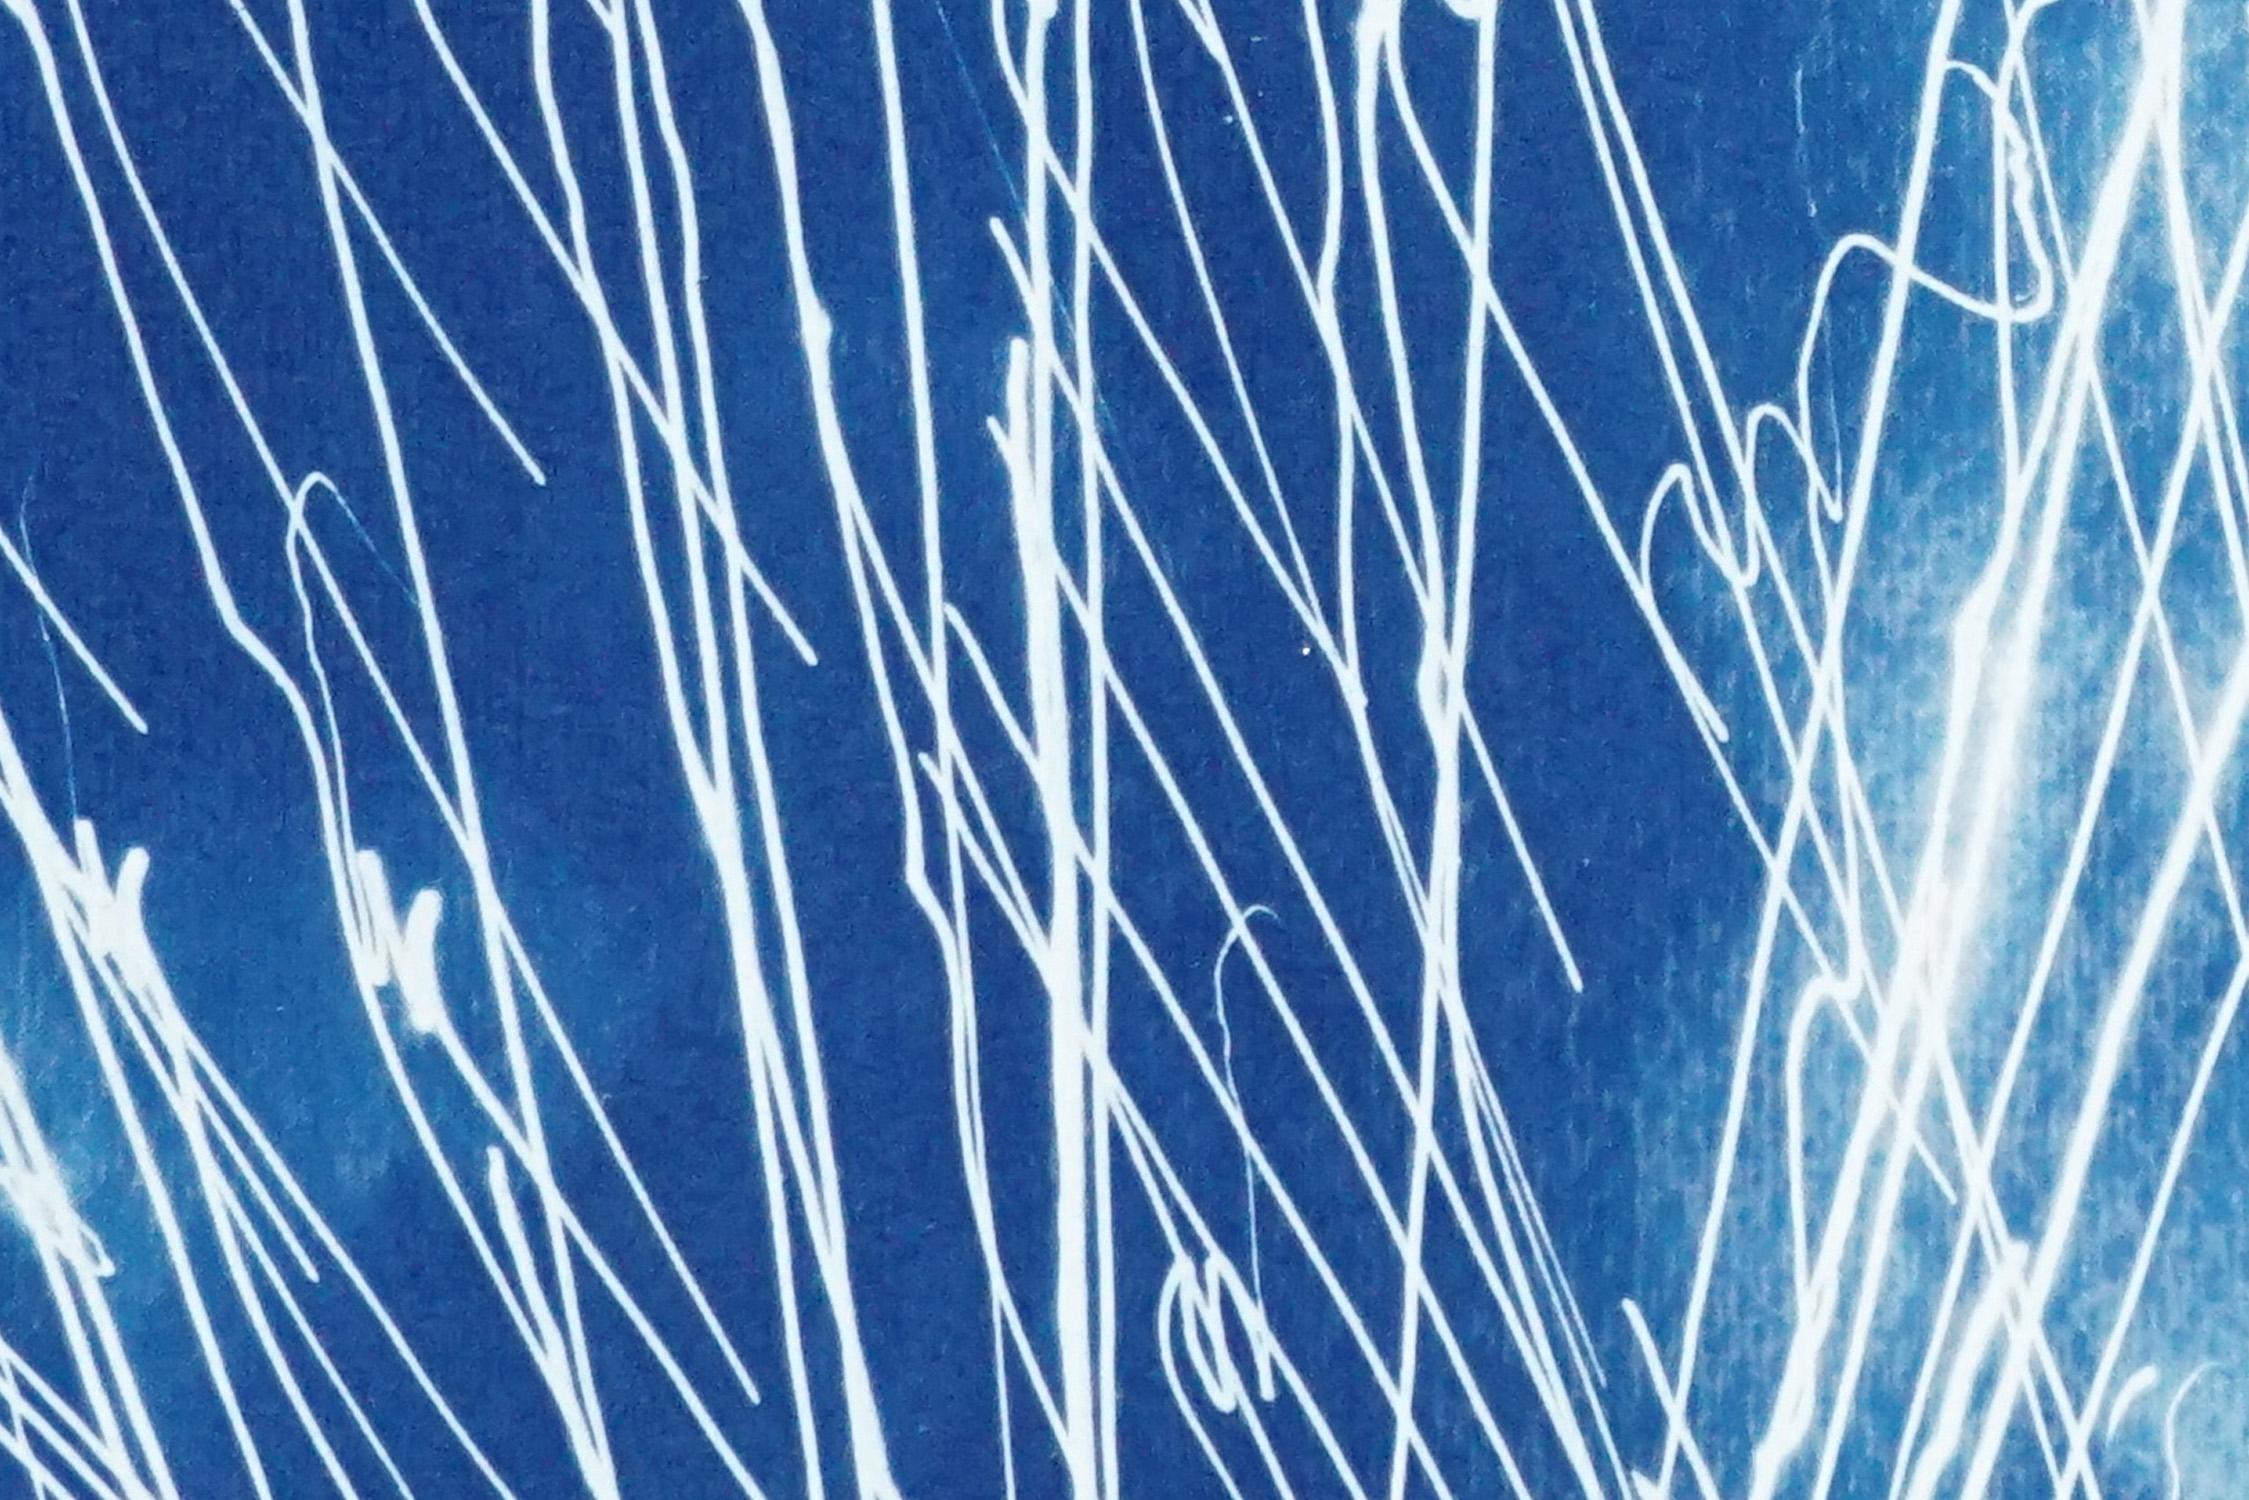 Fireworks Lights in Sky Blue Diptych, Handmade Cyanotype on Watercolor Paper,  4